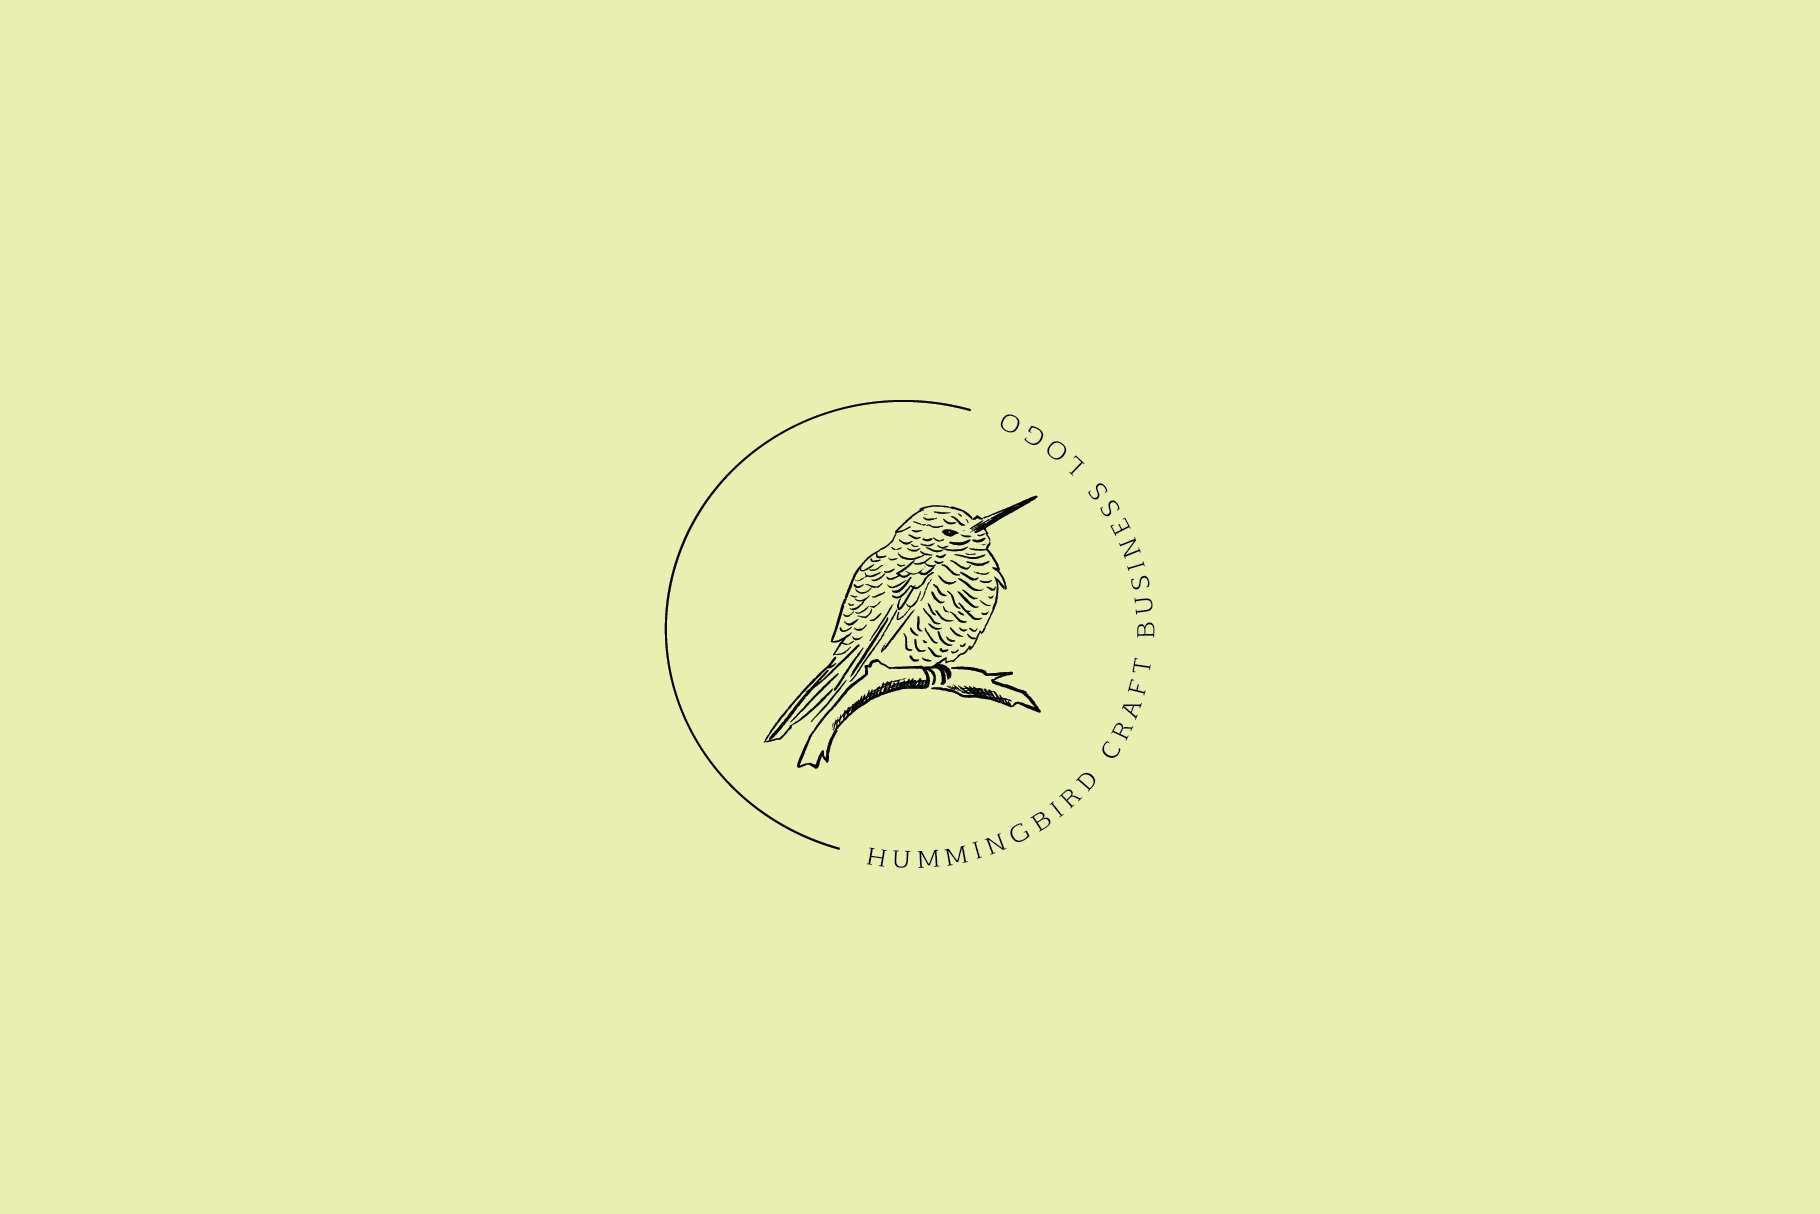 Hummingbird Logo 2 preview image.